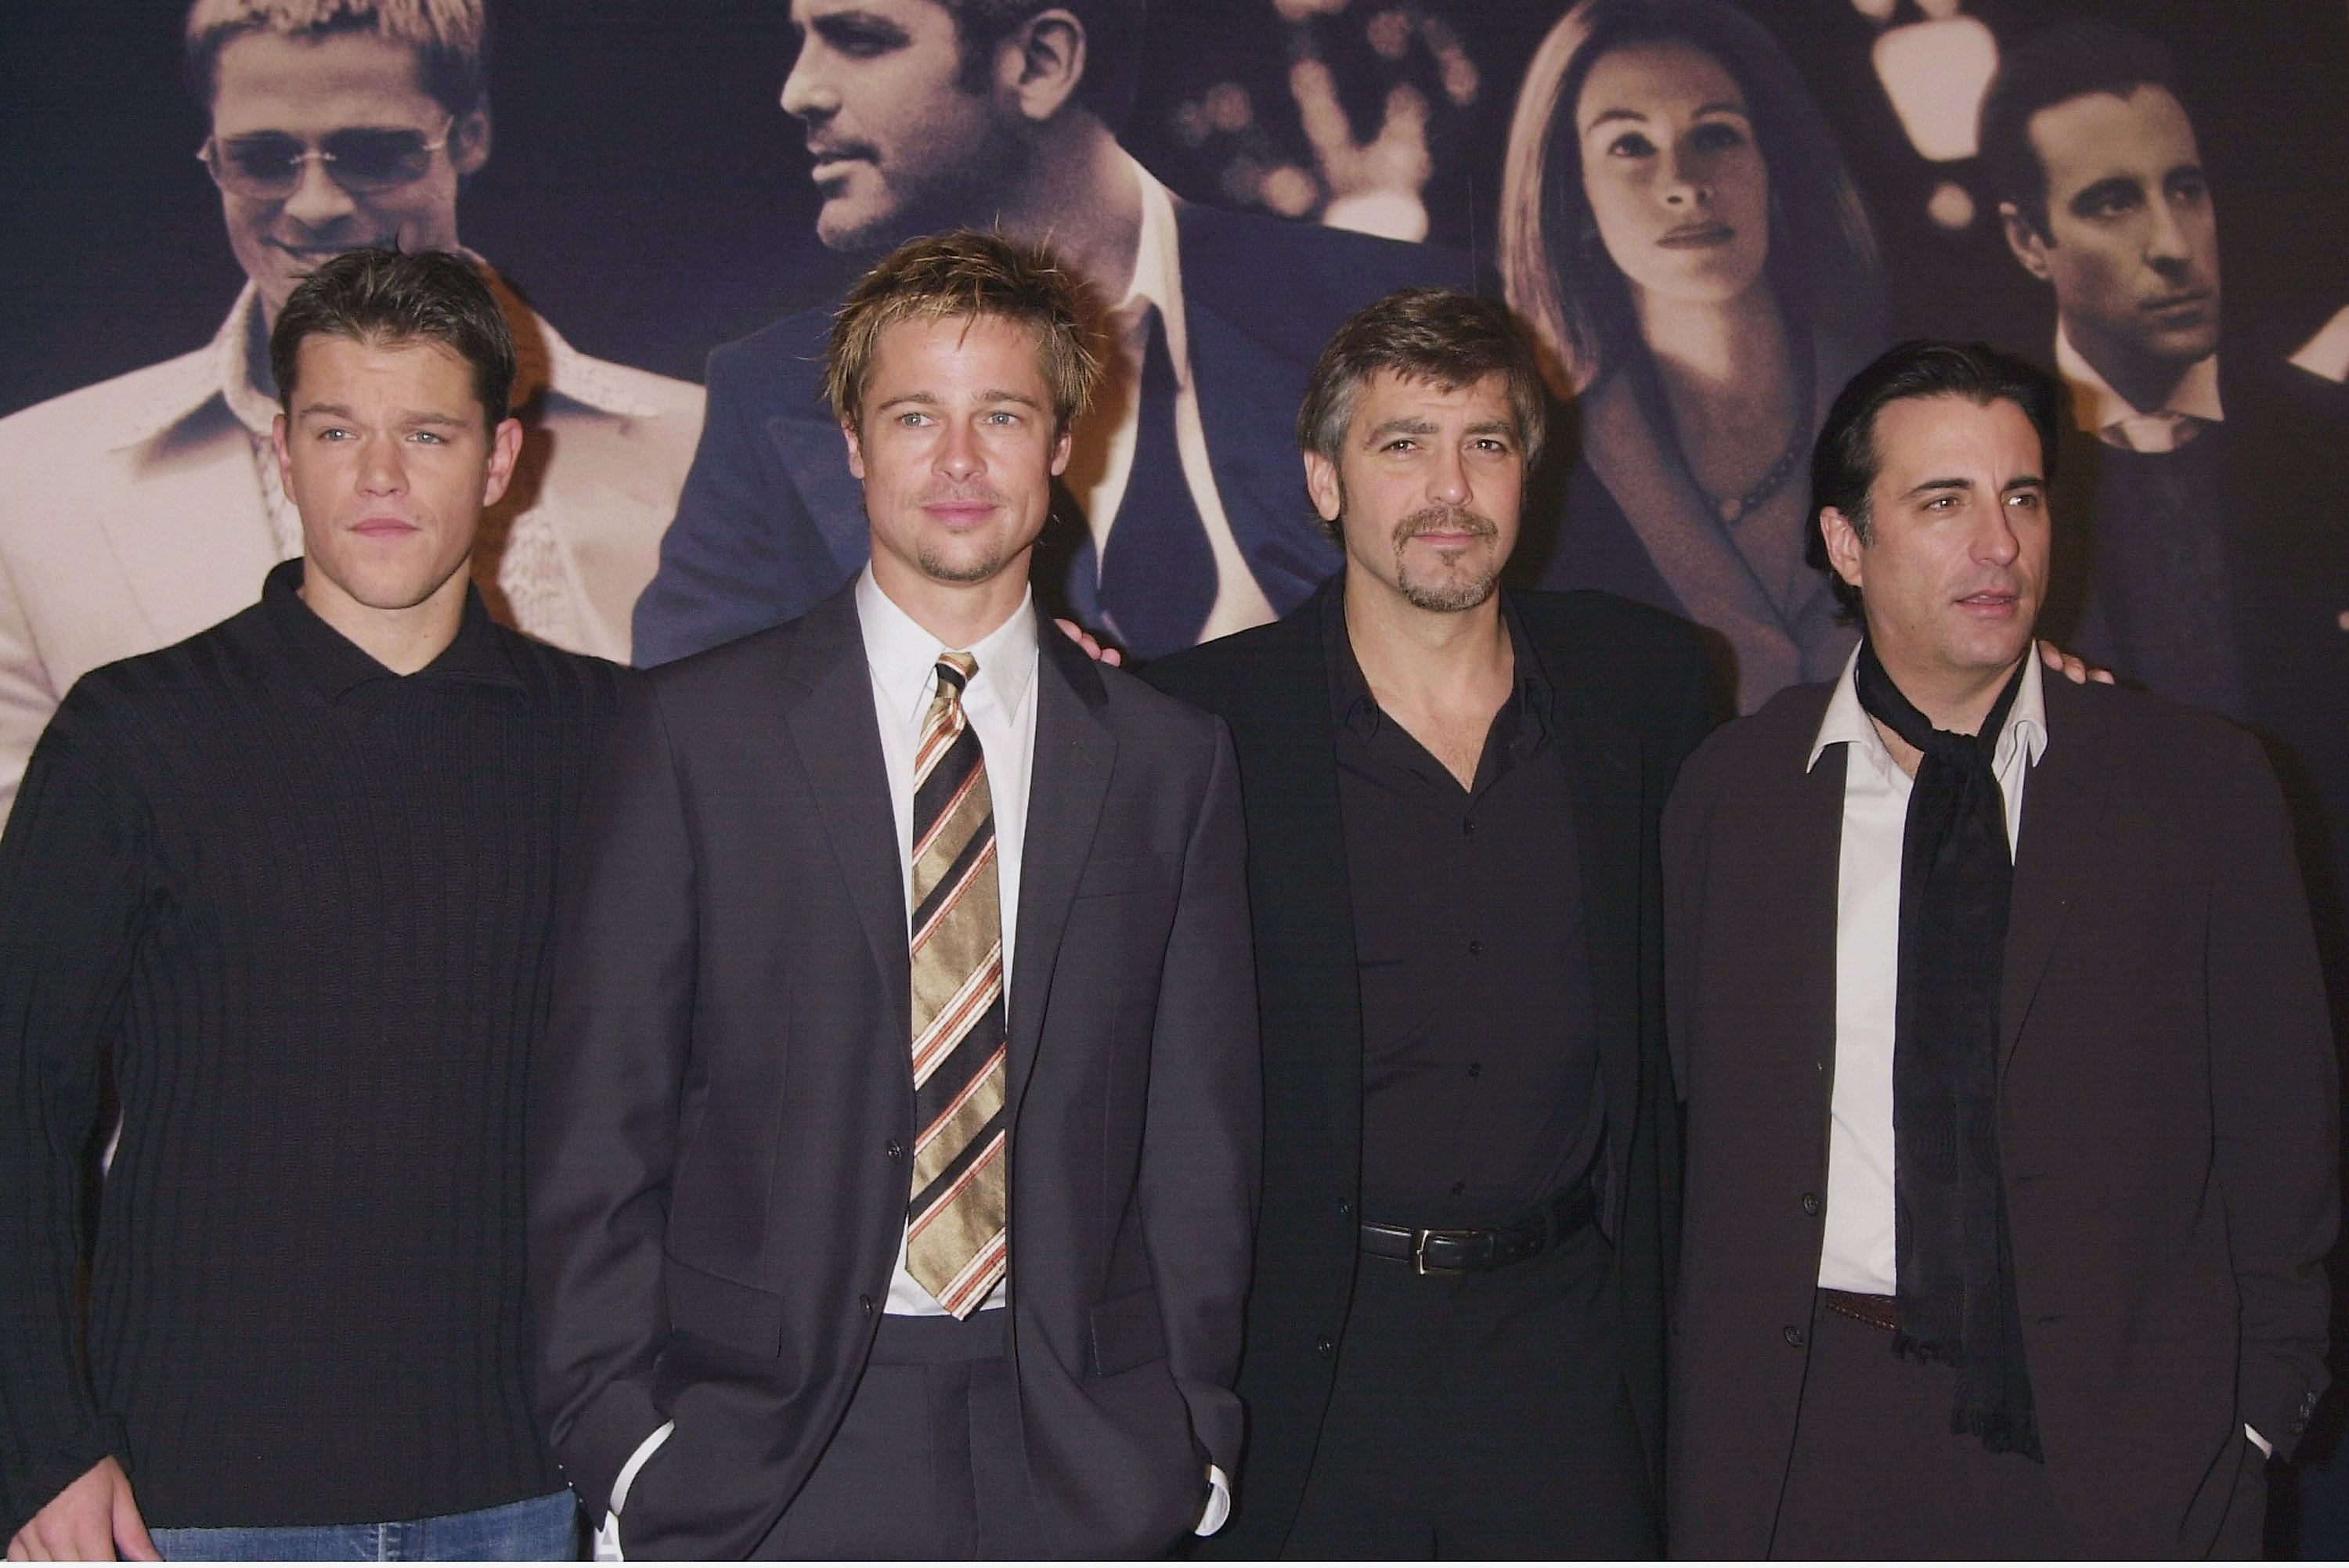 Matt Damon, Brad Pitt, George Clooney and Andy Garcia promote their film 'Ocean's 11' in London in 2001.